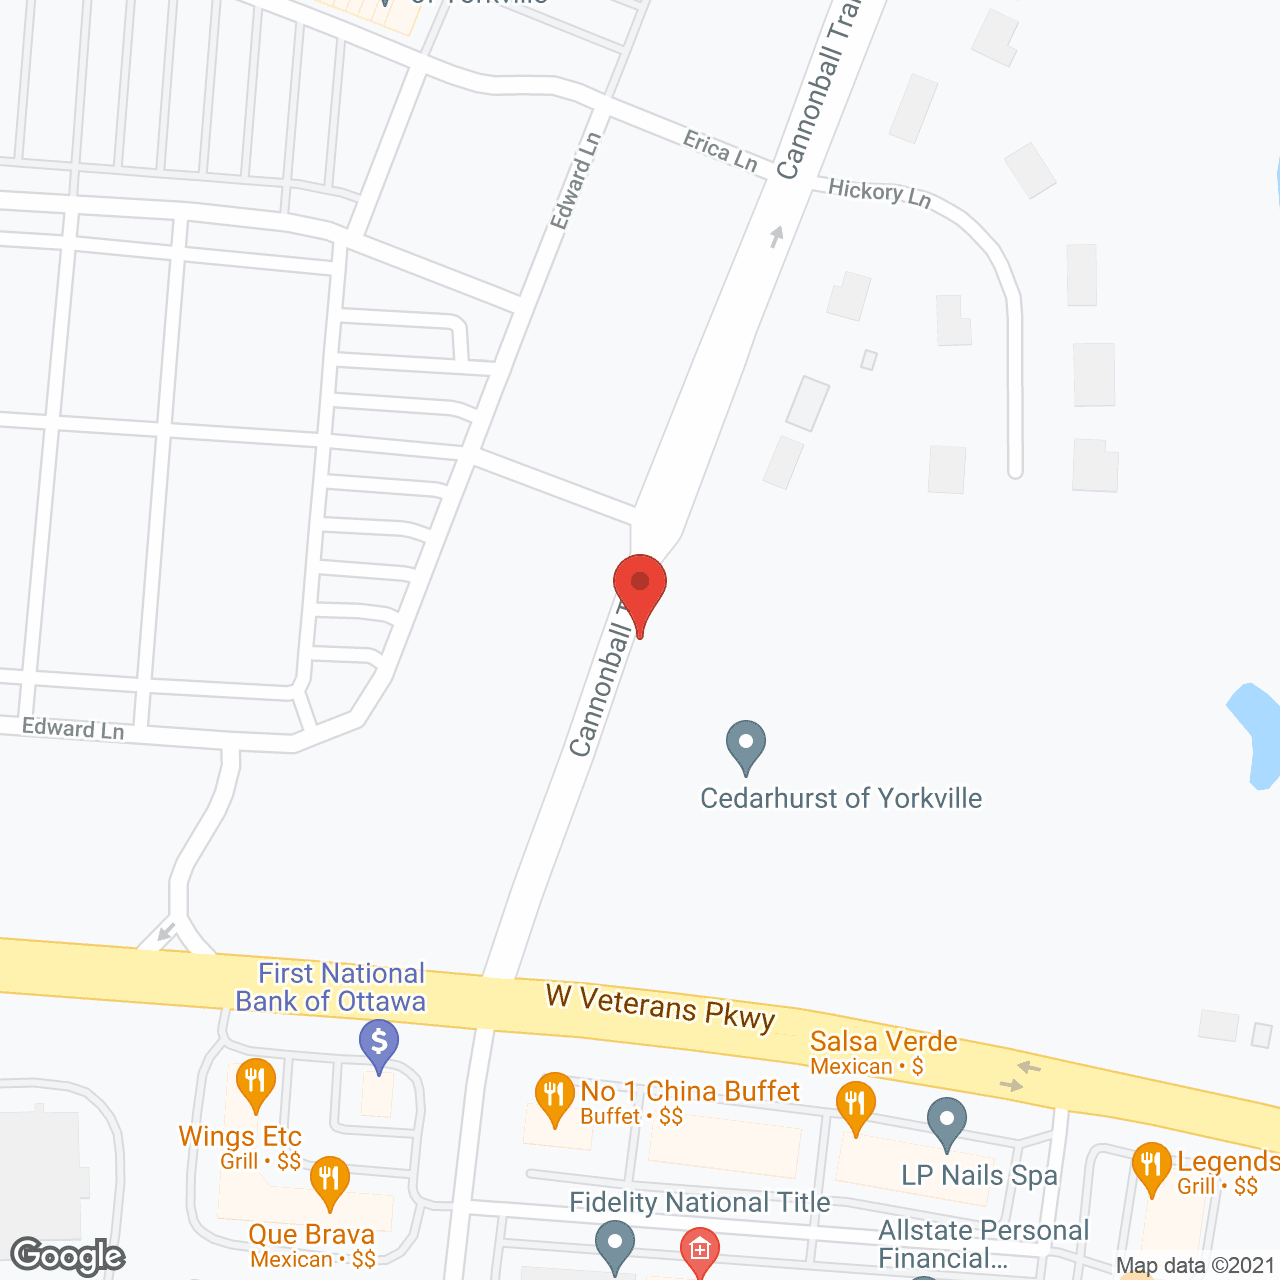 Cedarhurst of Yorkville in google map